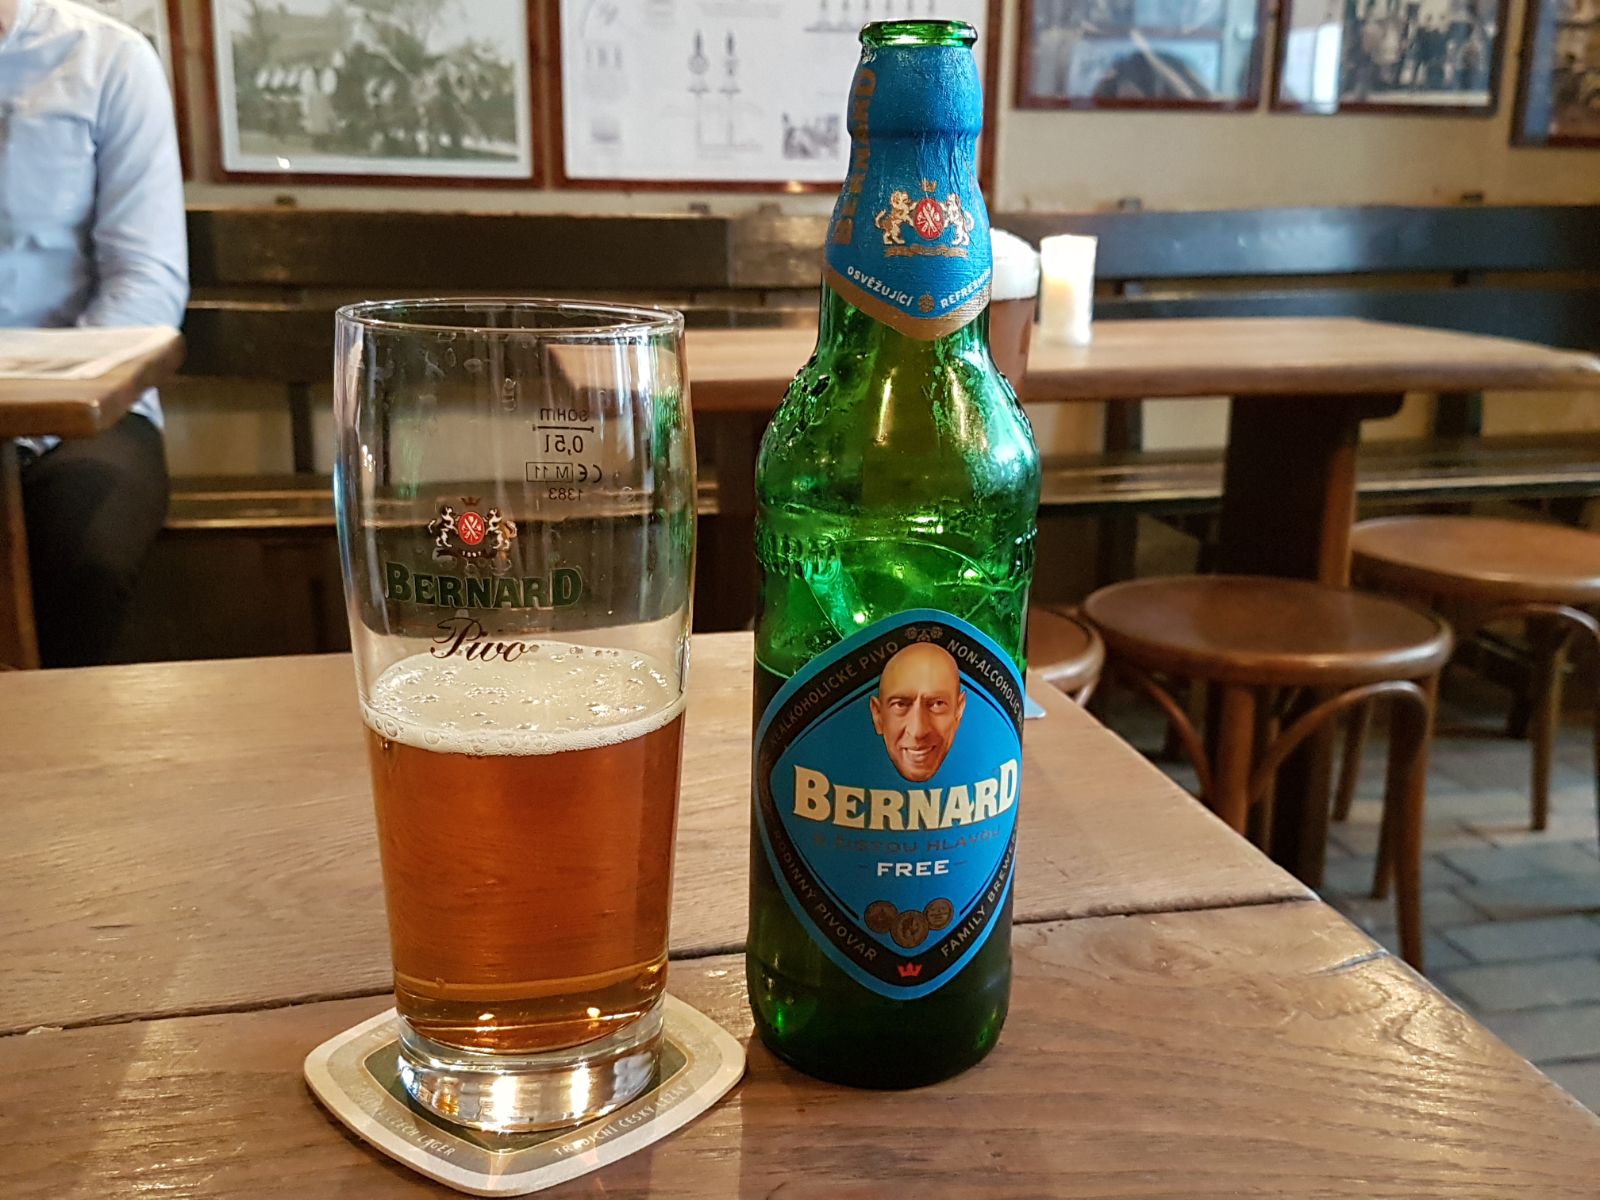 Image of Bernard beer